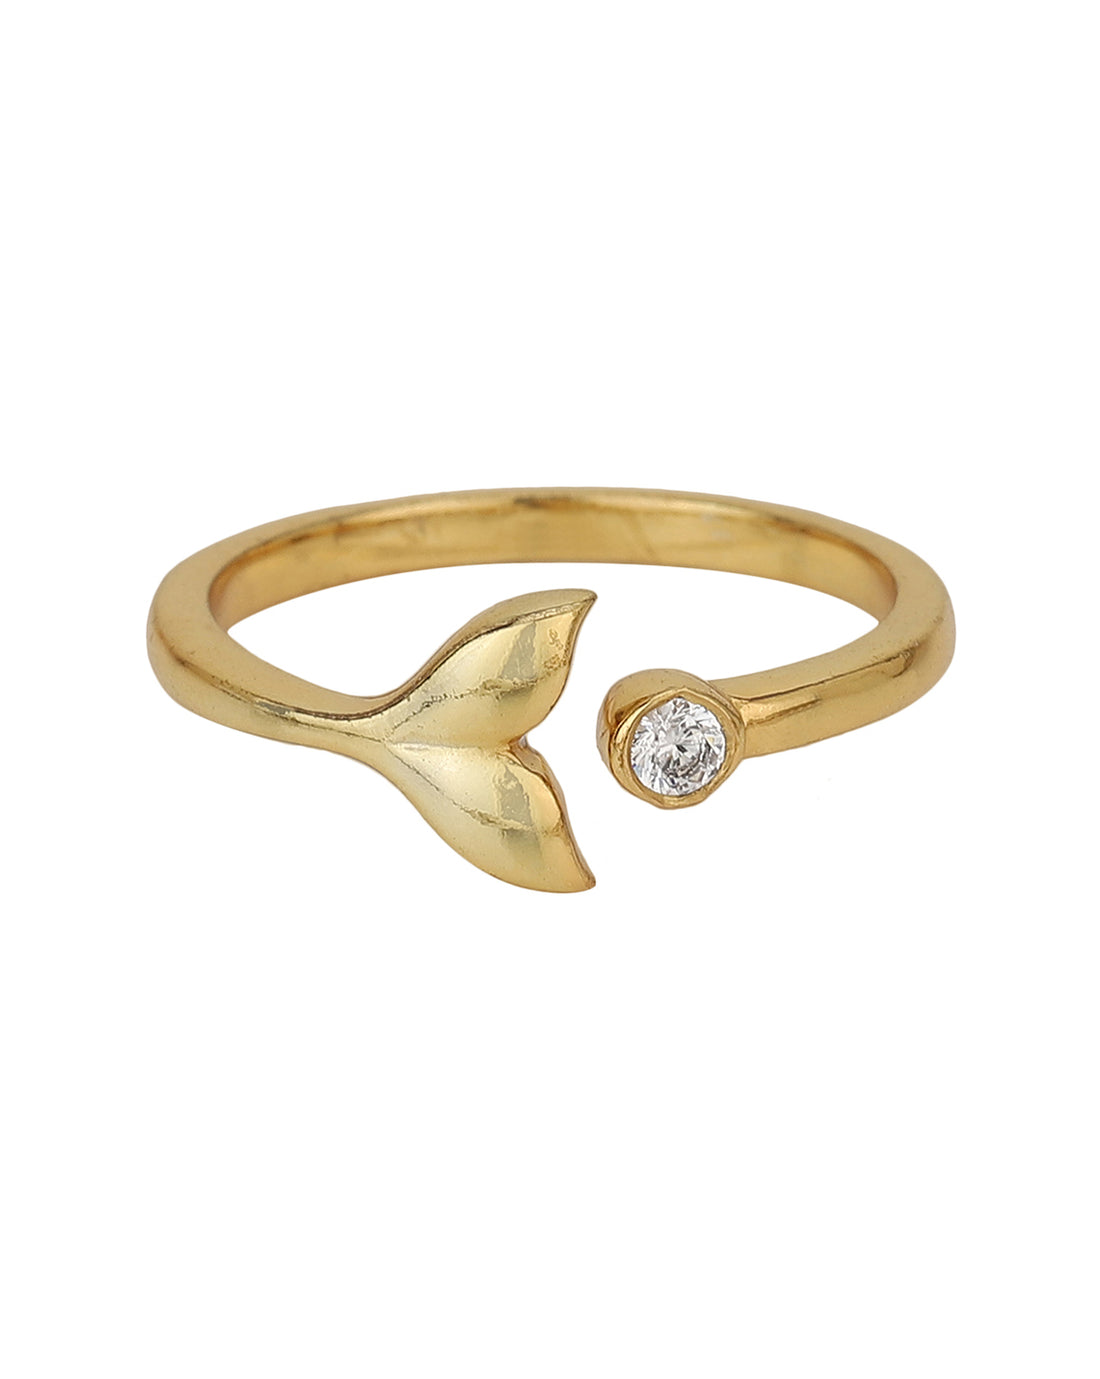 Carlton London Gold Plated CZ Studded Adjustable Finger Ring For Women